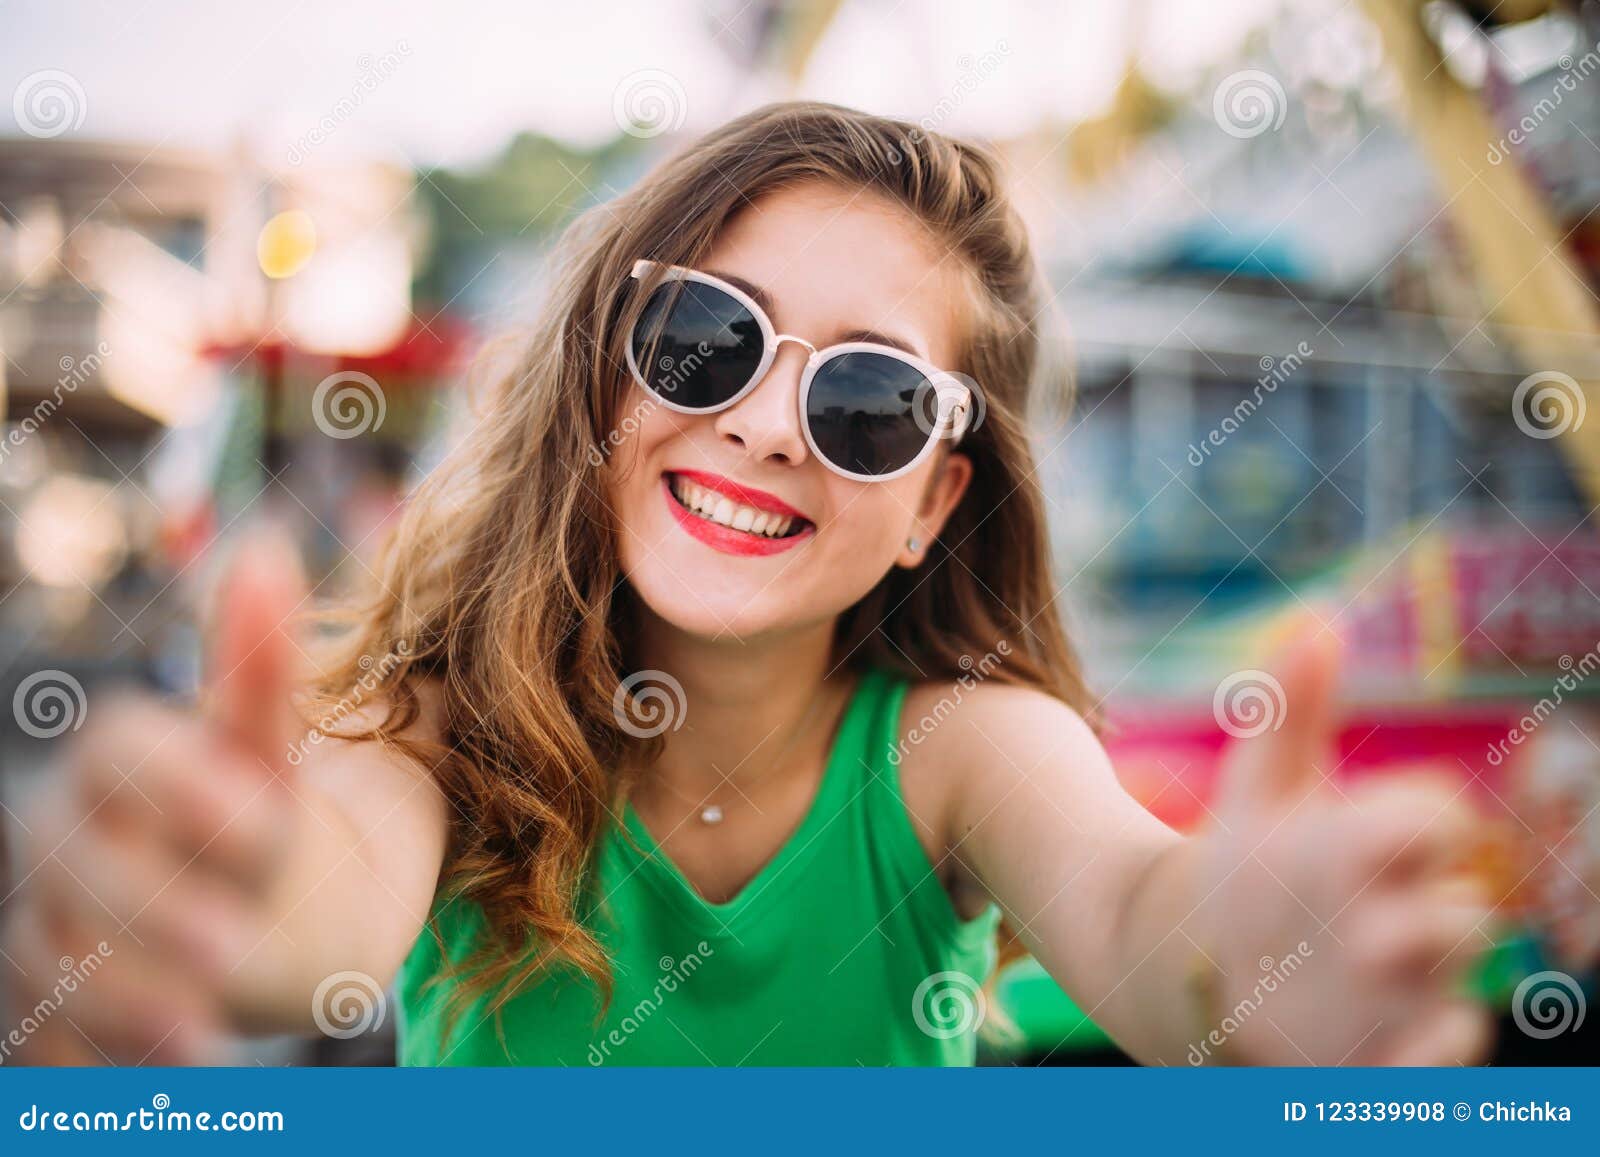 pretty girl selfie sunglasses laughing